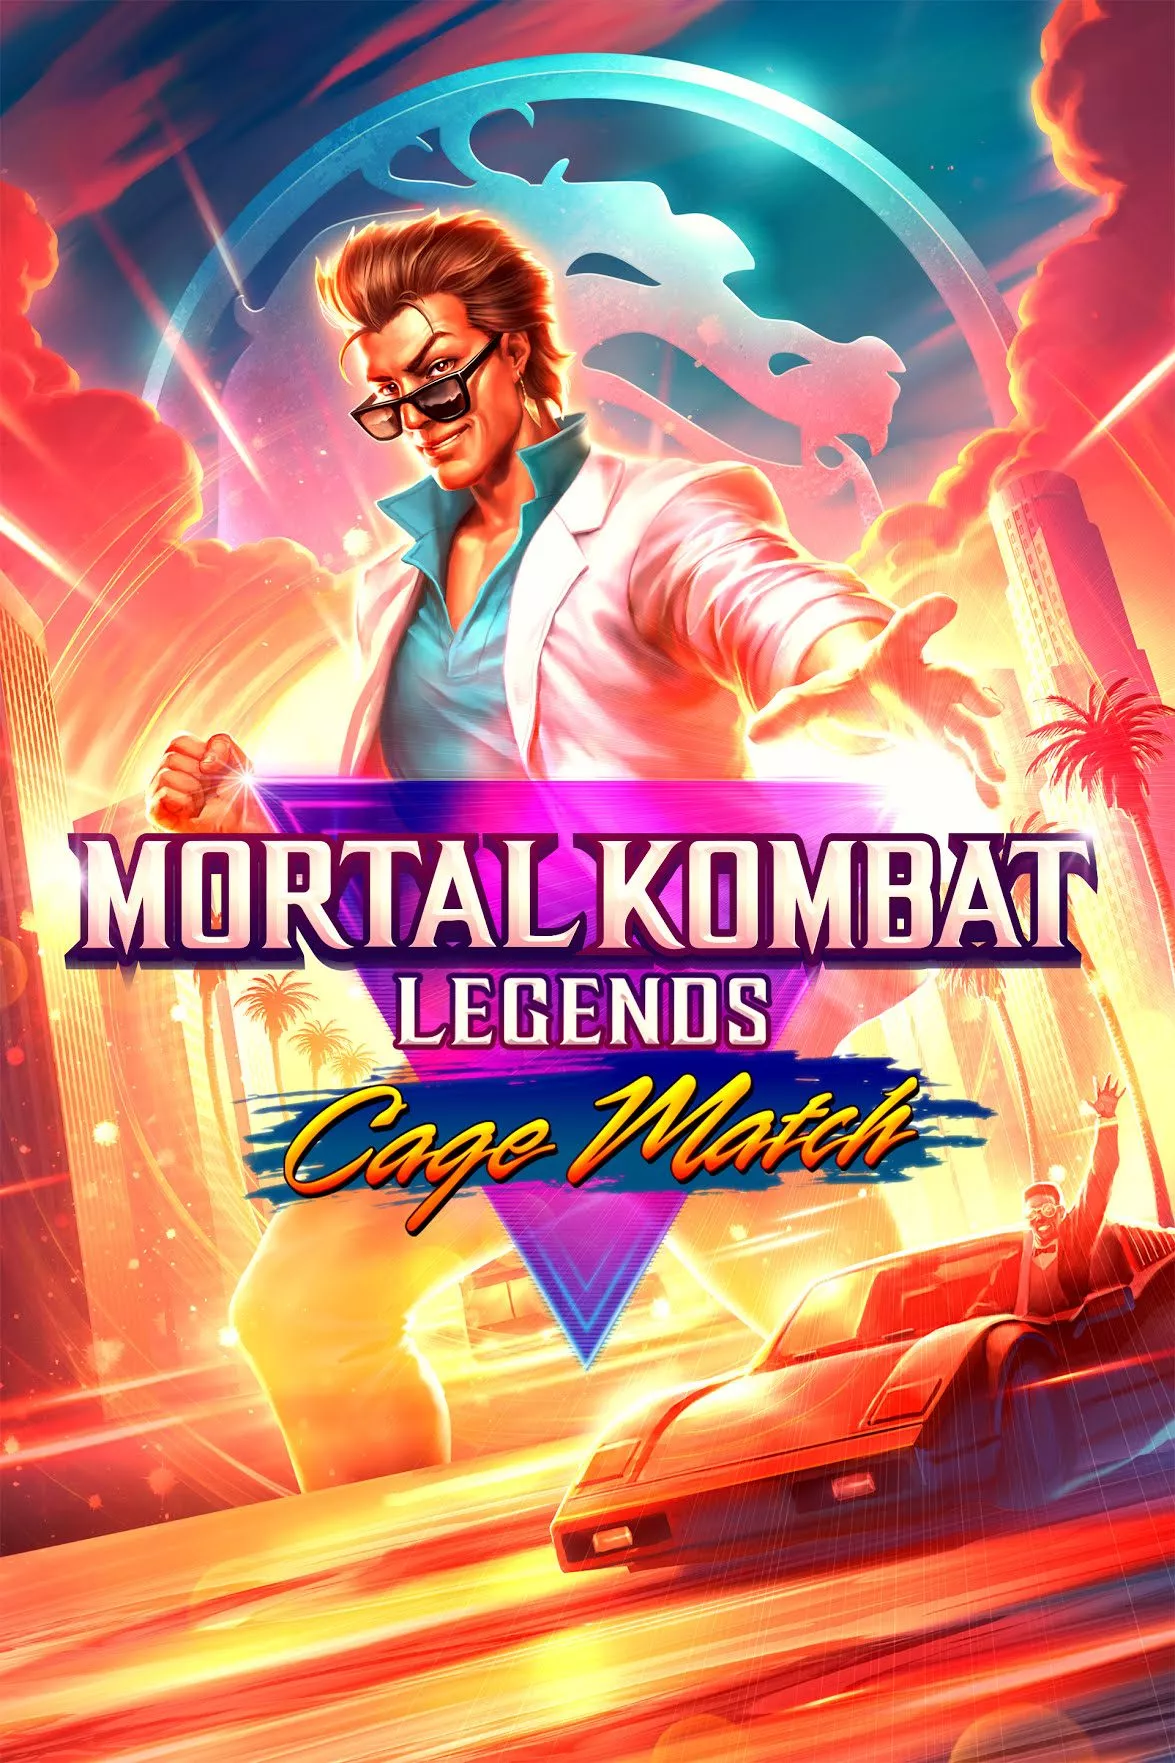 Mortal Kombat Legends: Cage Match | Official Red Band Trailer | Warner Bros. Entertainment